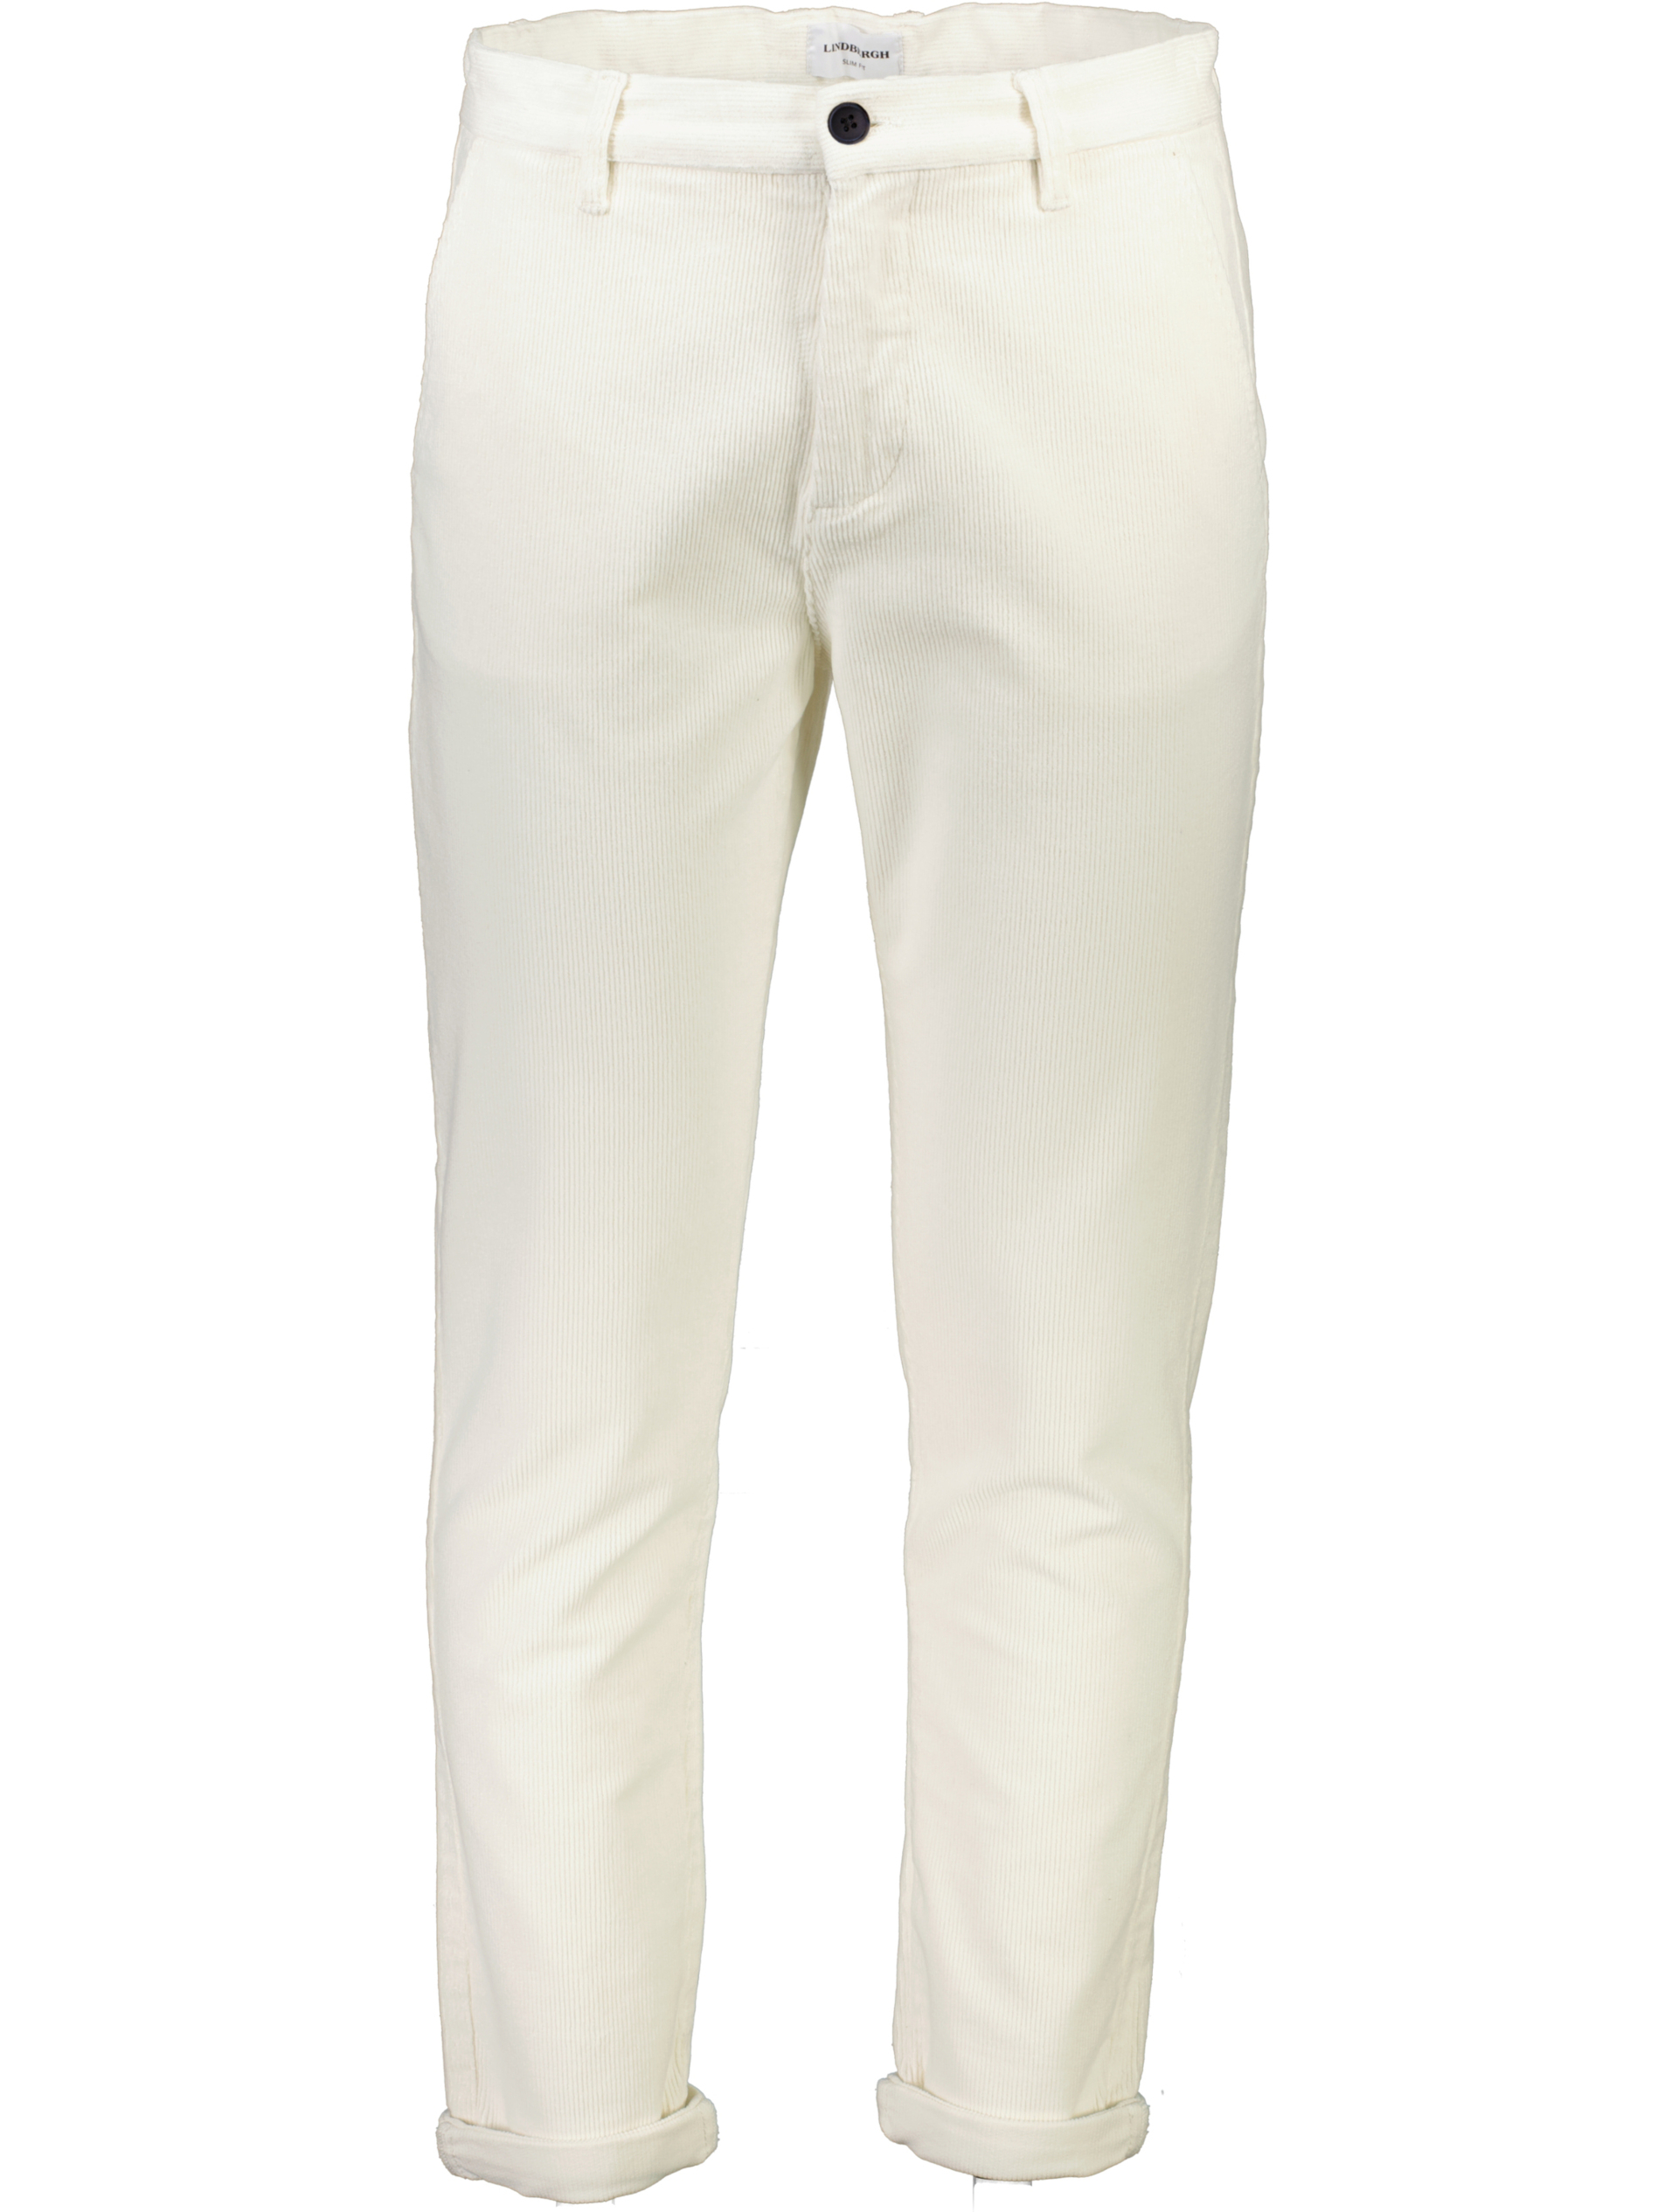 Lindbergh Corduroy trousers white / off white